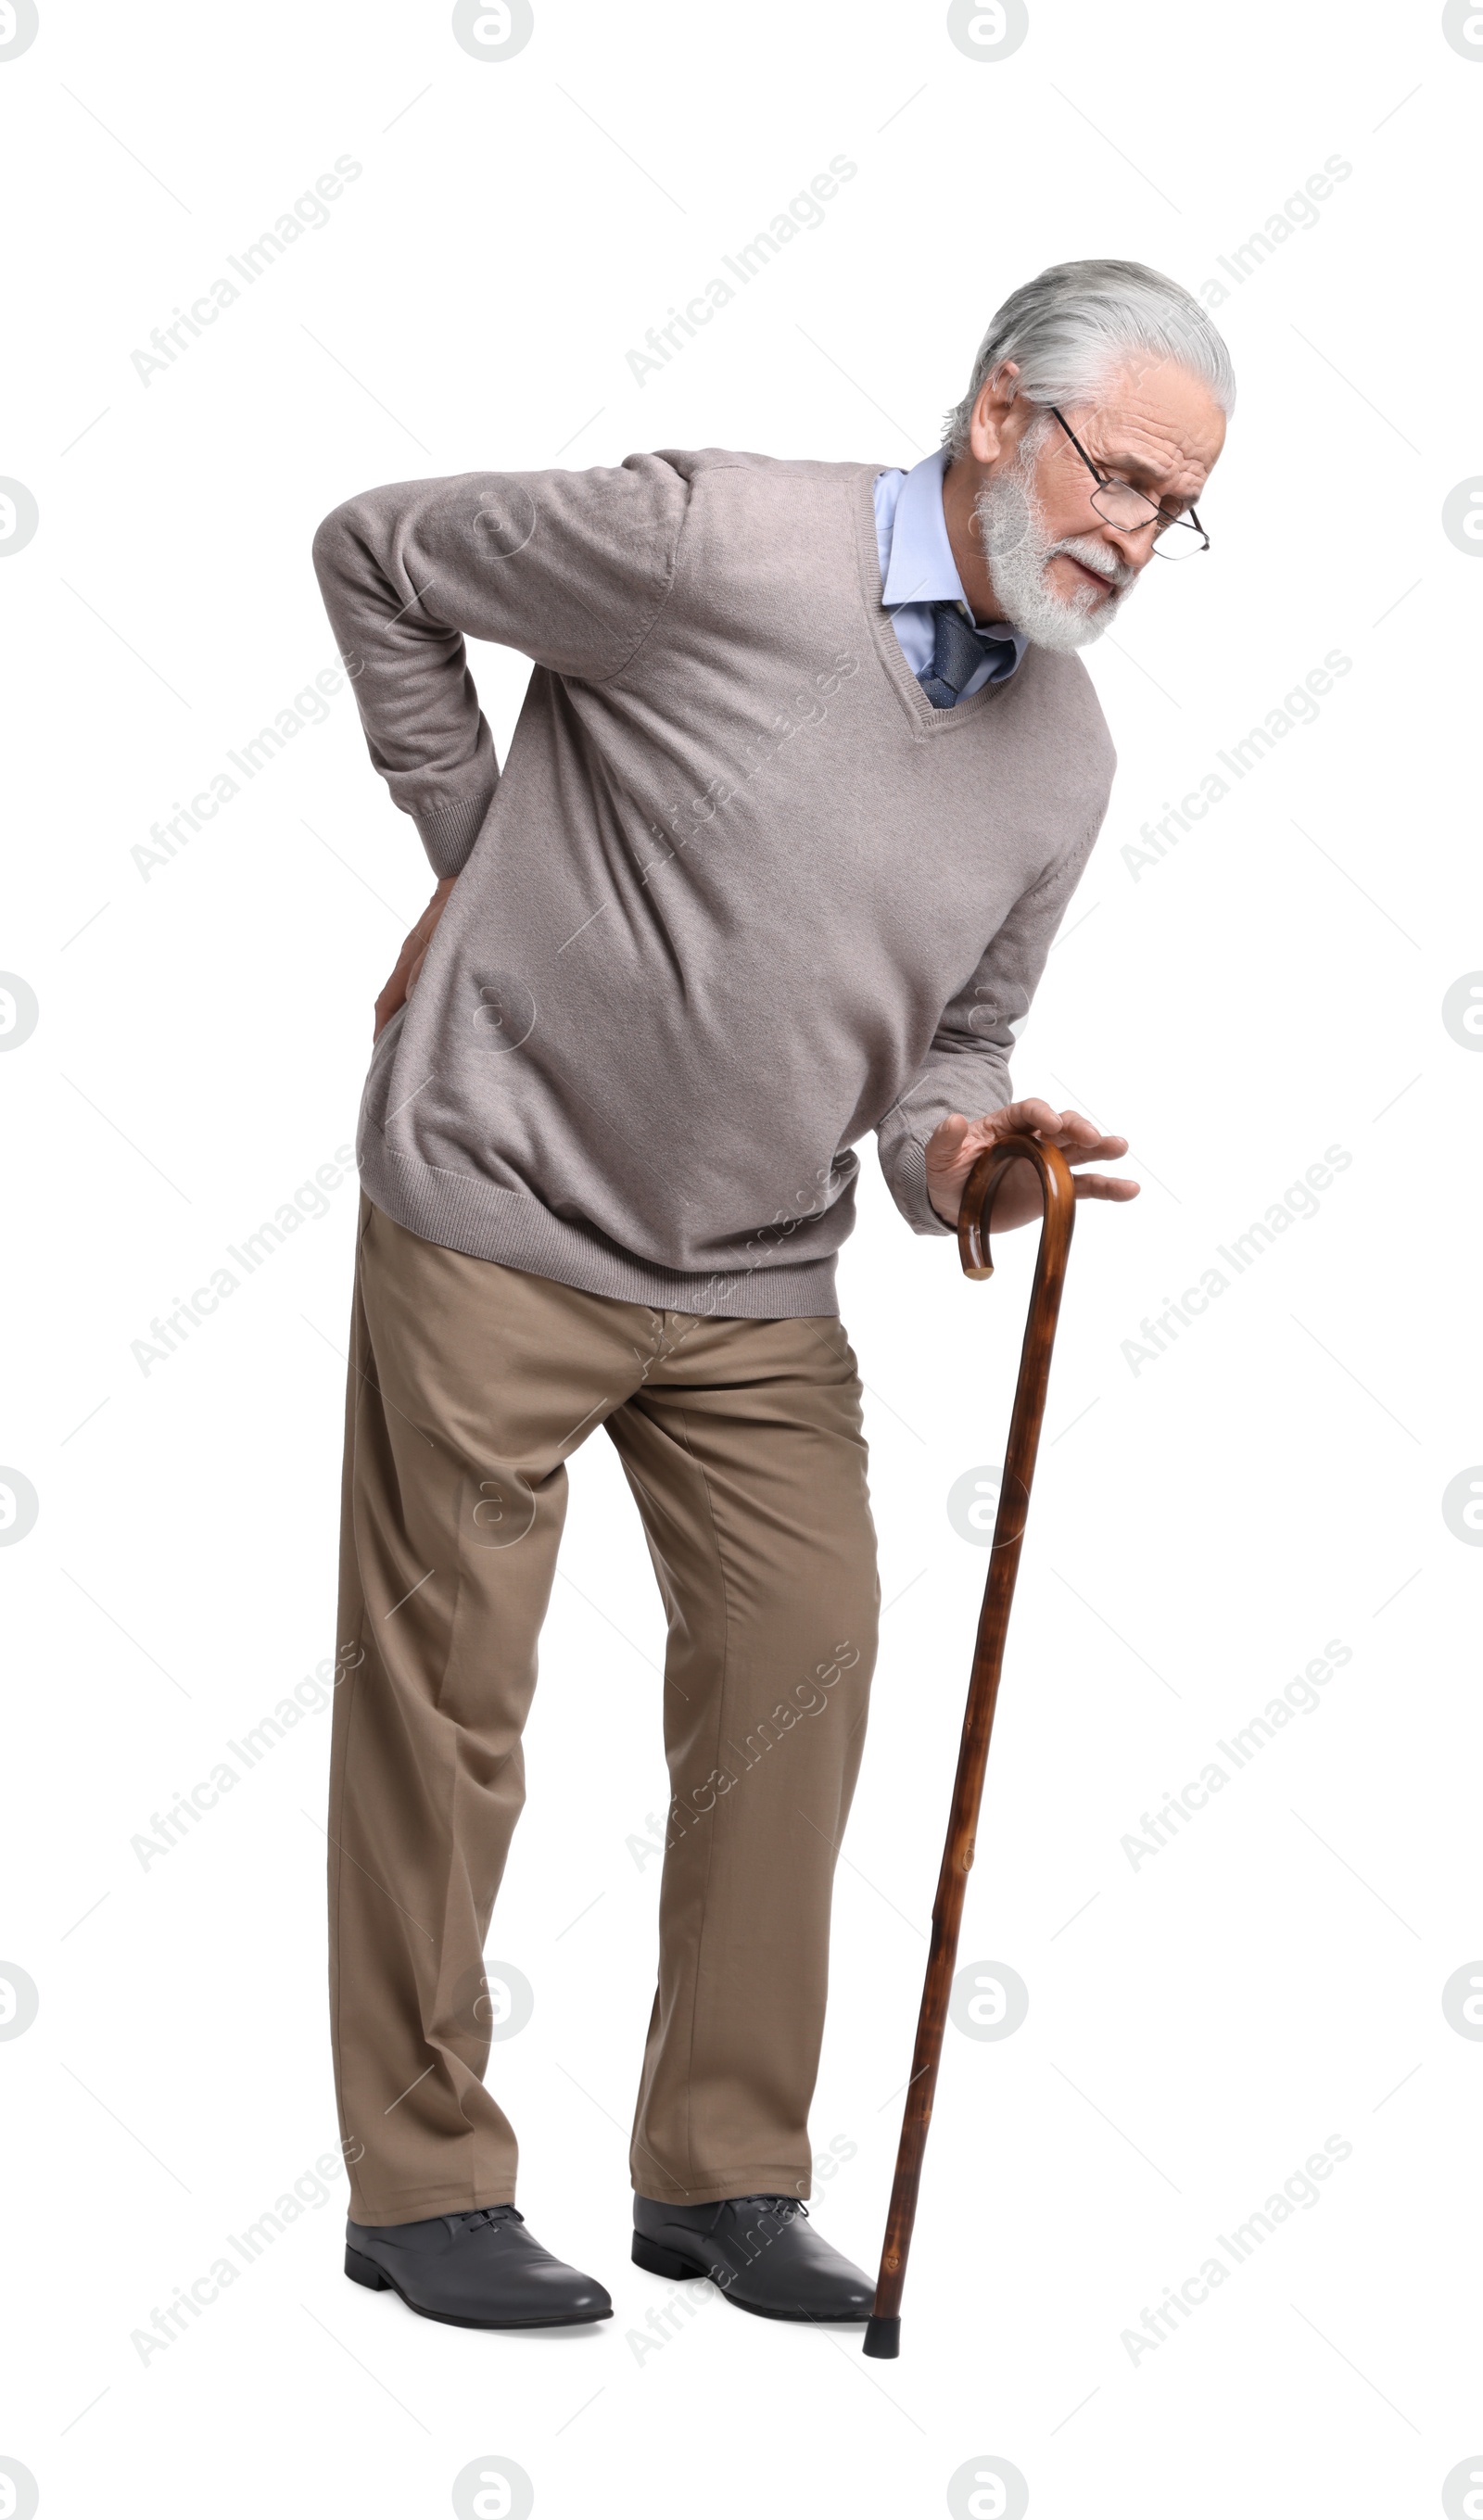 Photo of Tired senior man with walking cane on white background